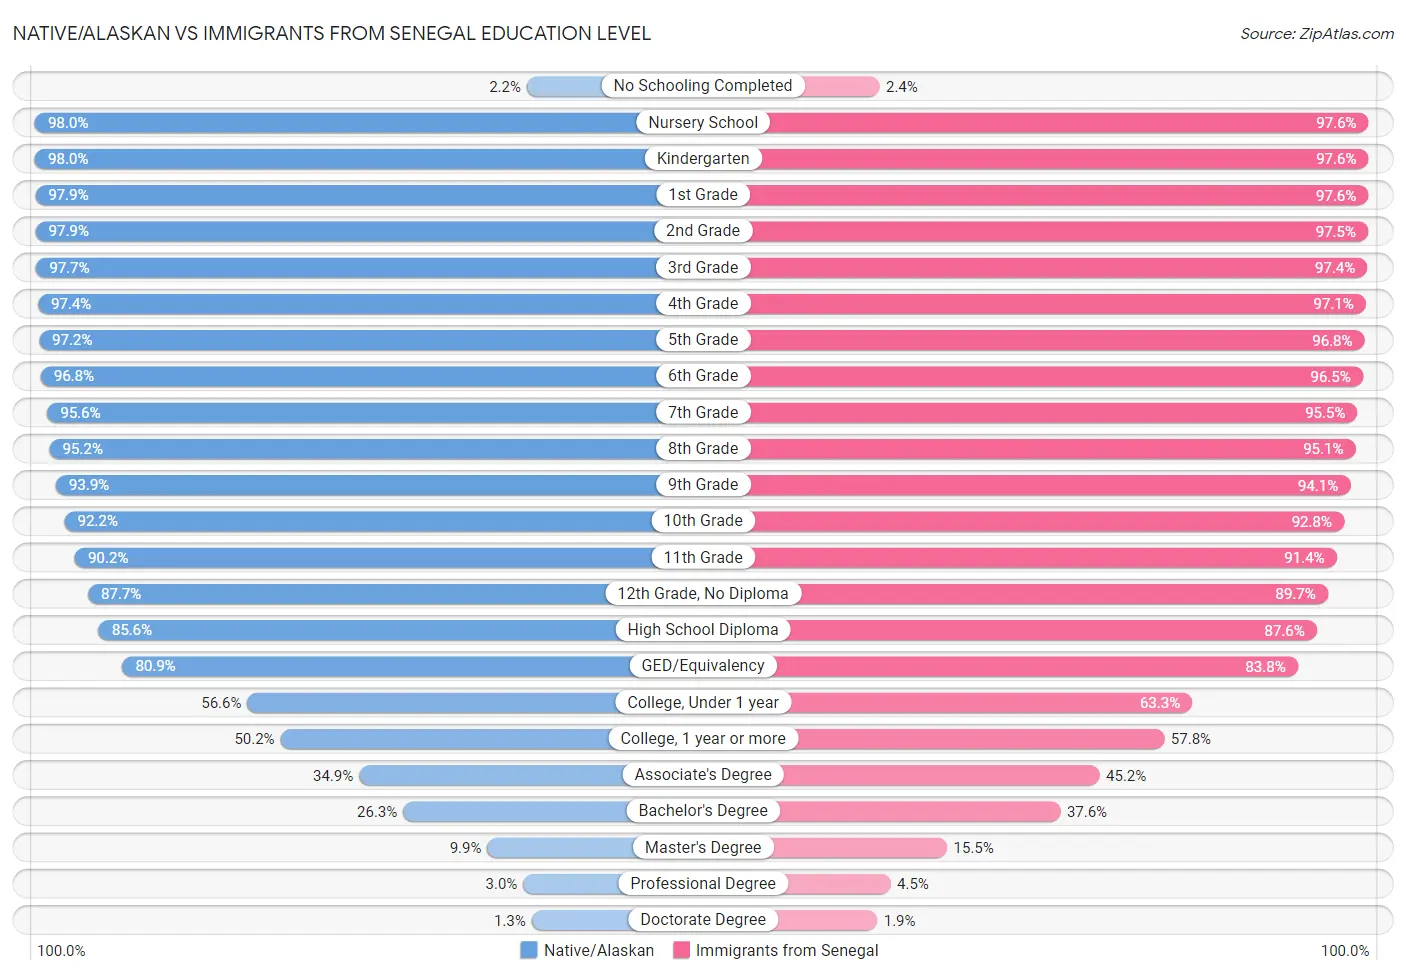 Native/Alaskan vs Immigrants from Senegal Education Level